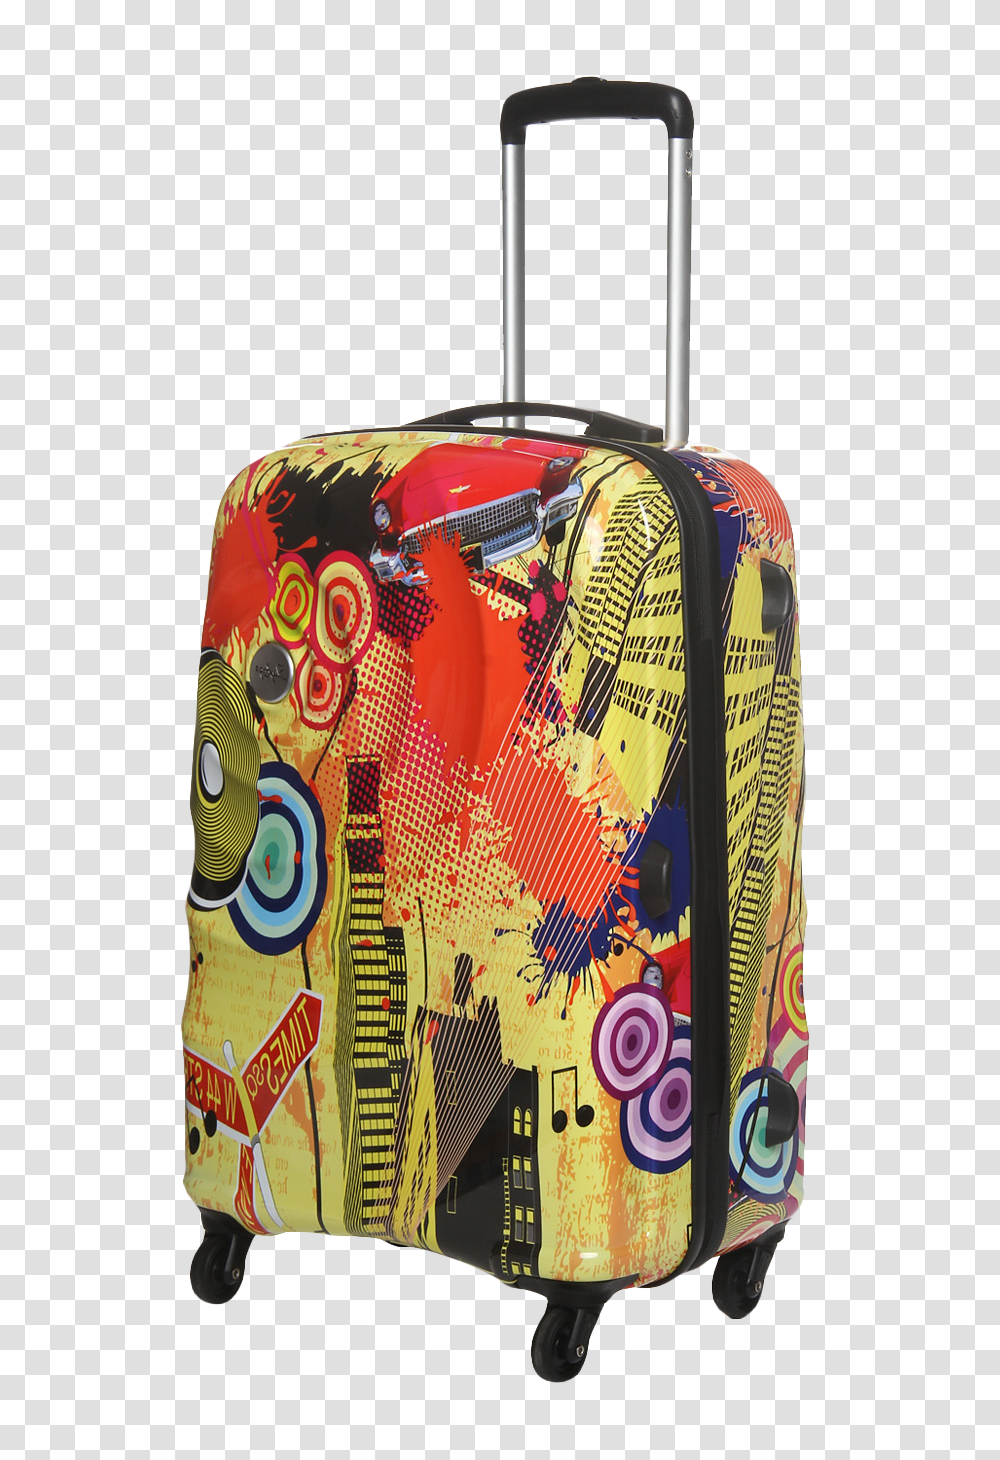 Strolley Bag Image, Luggage, Backpack, Suitcase Transparent Png